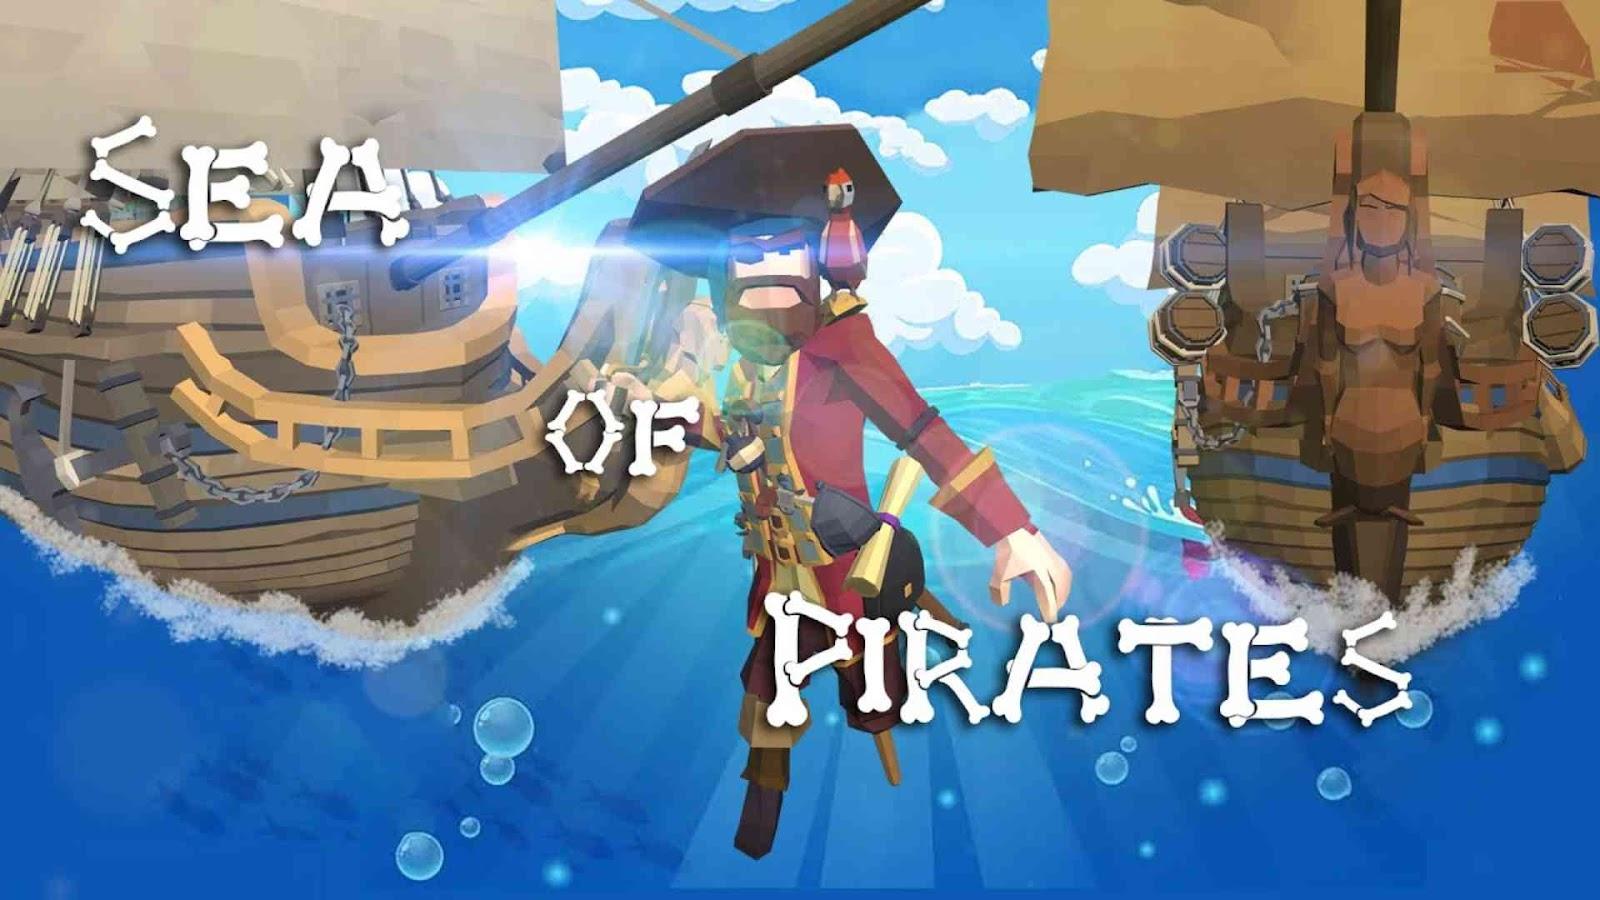 Sea of Pirates